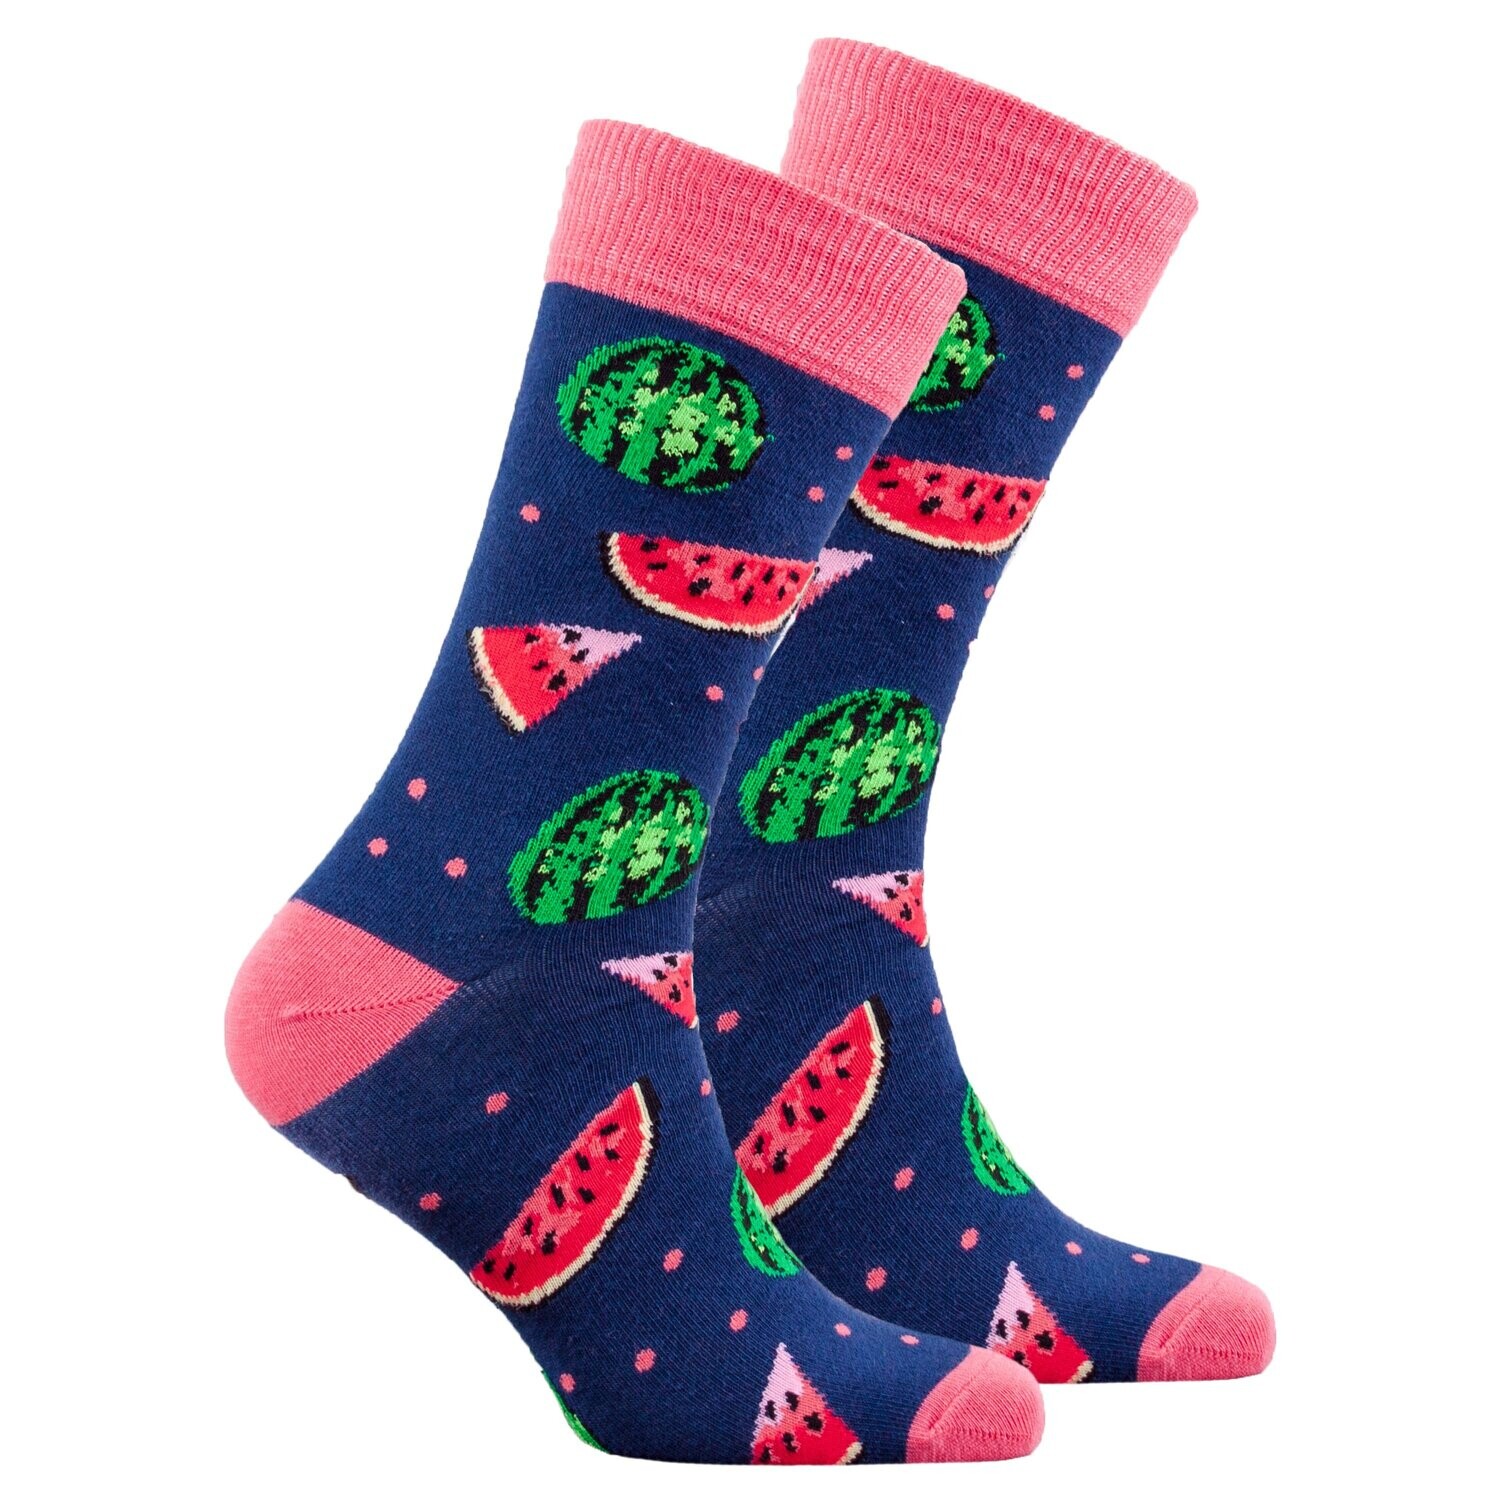 Men's Watermelon Socks